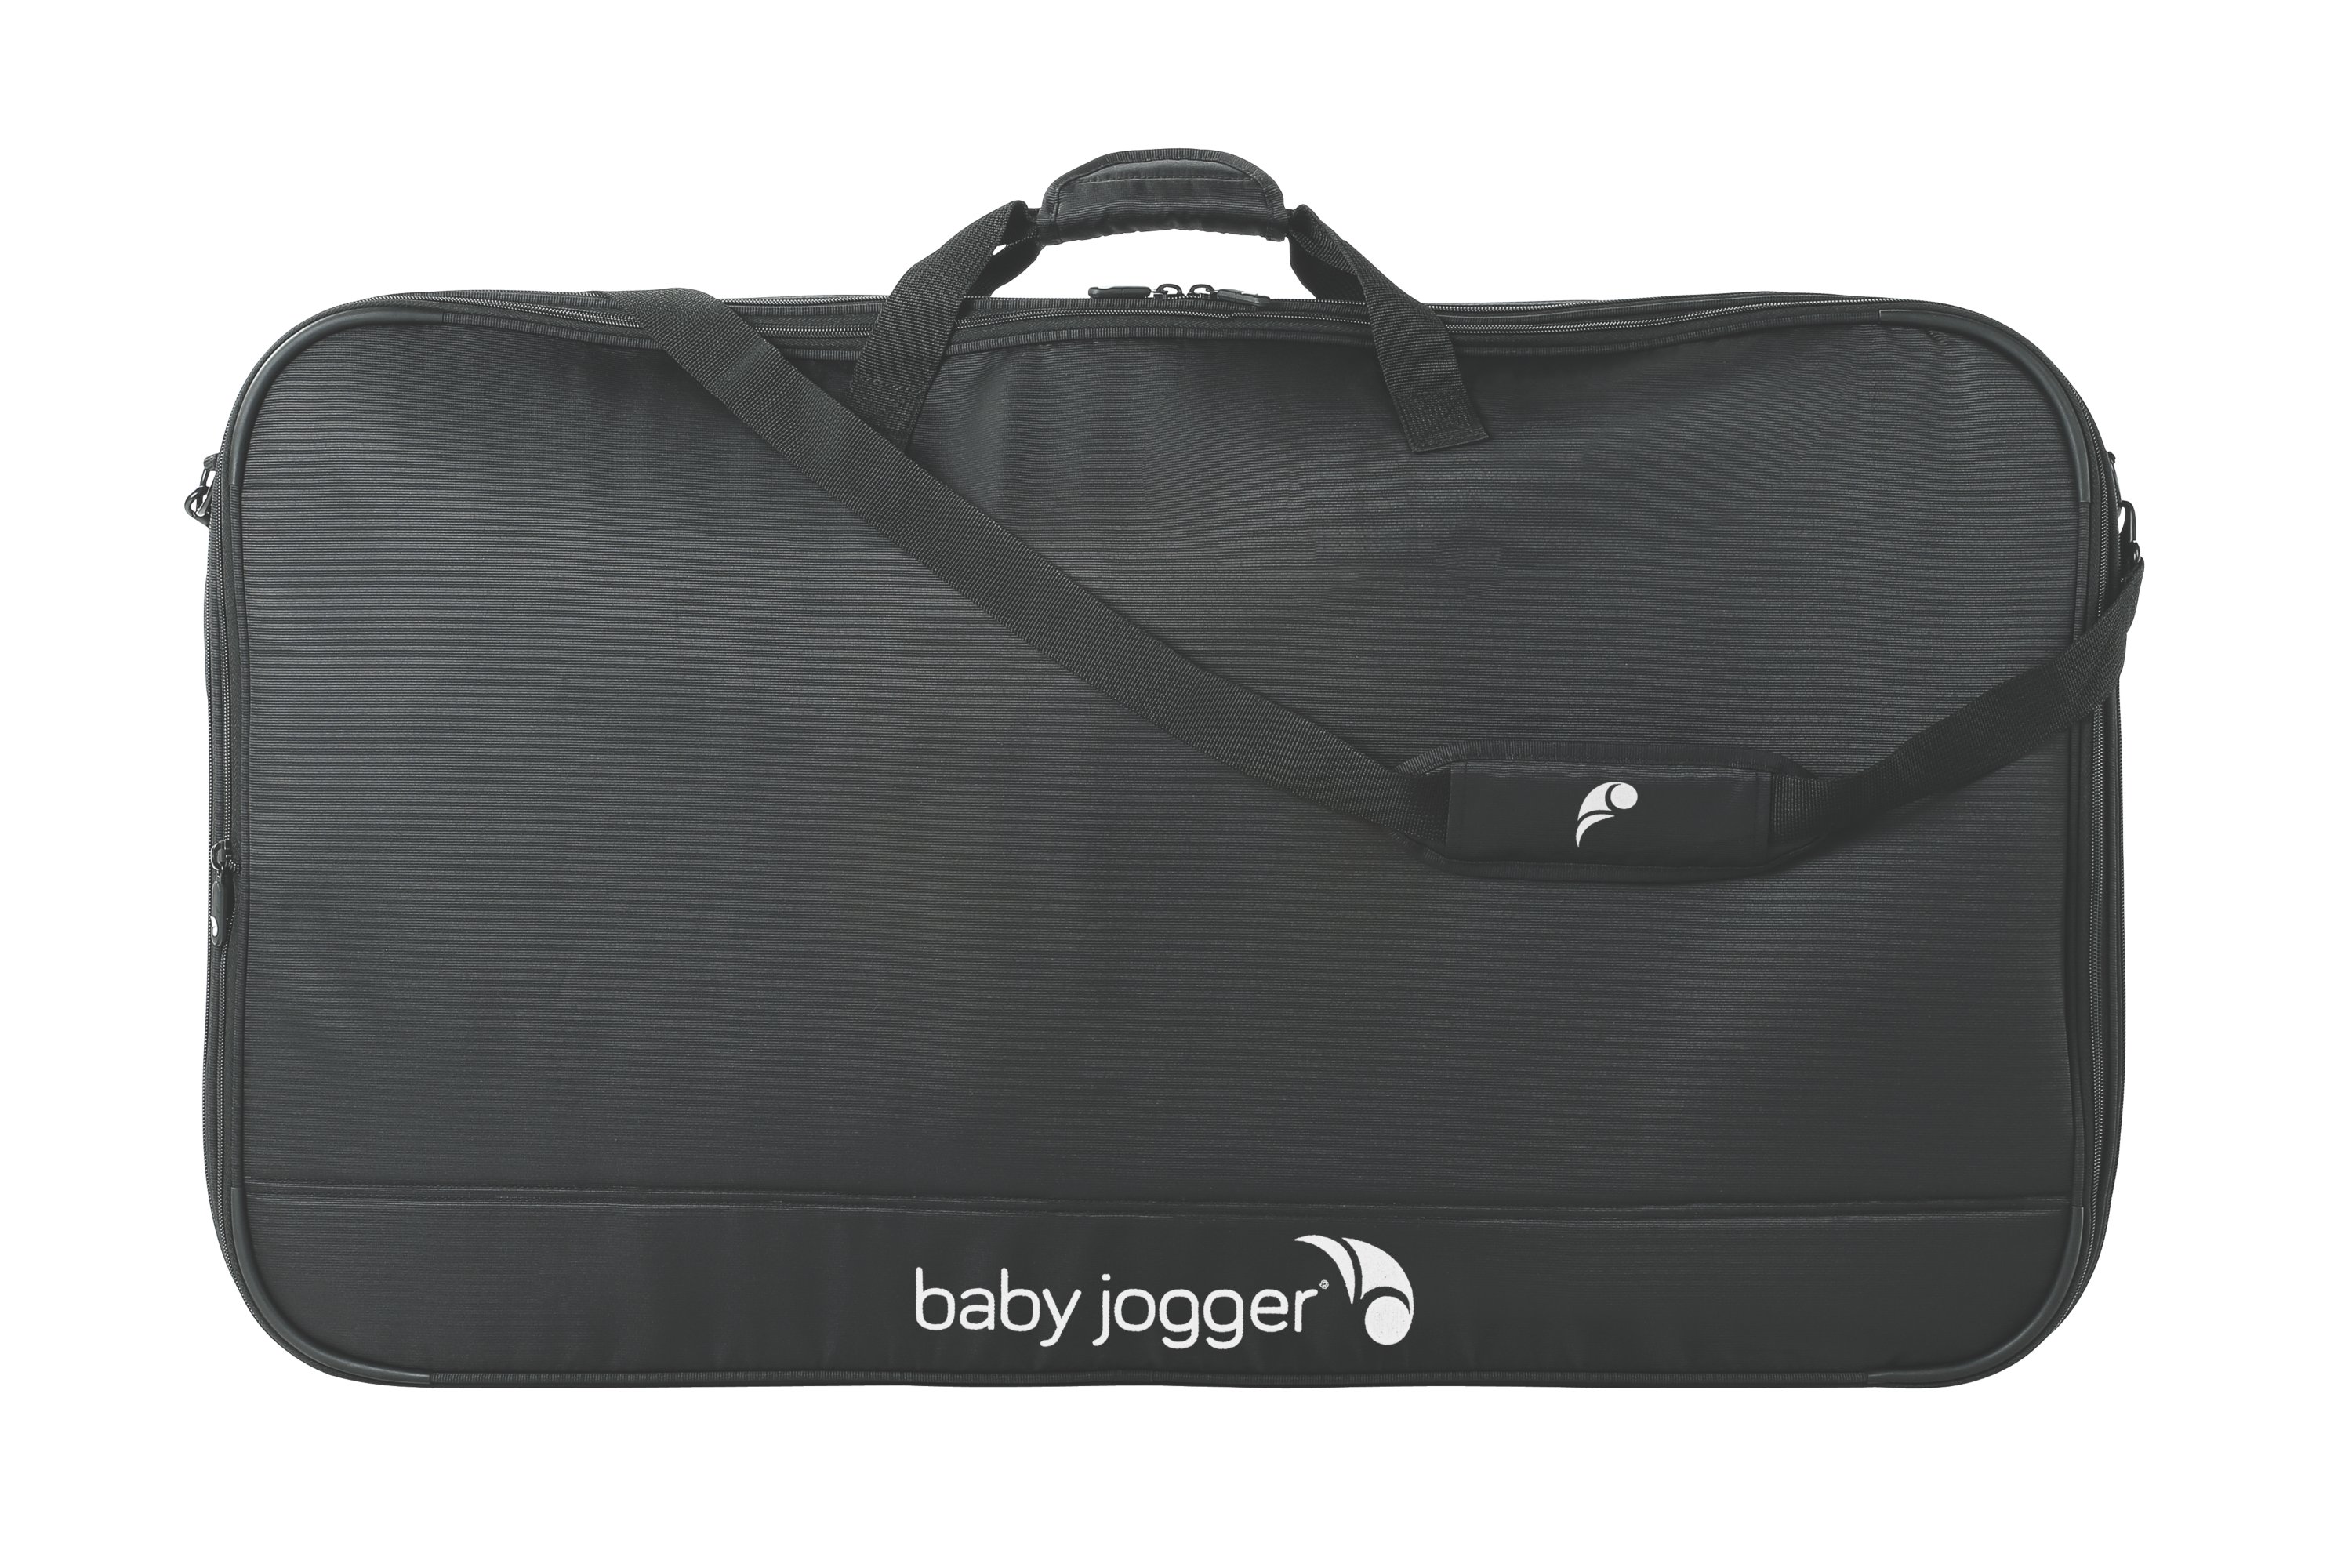 baby jogger single travel bag